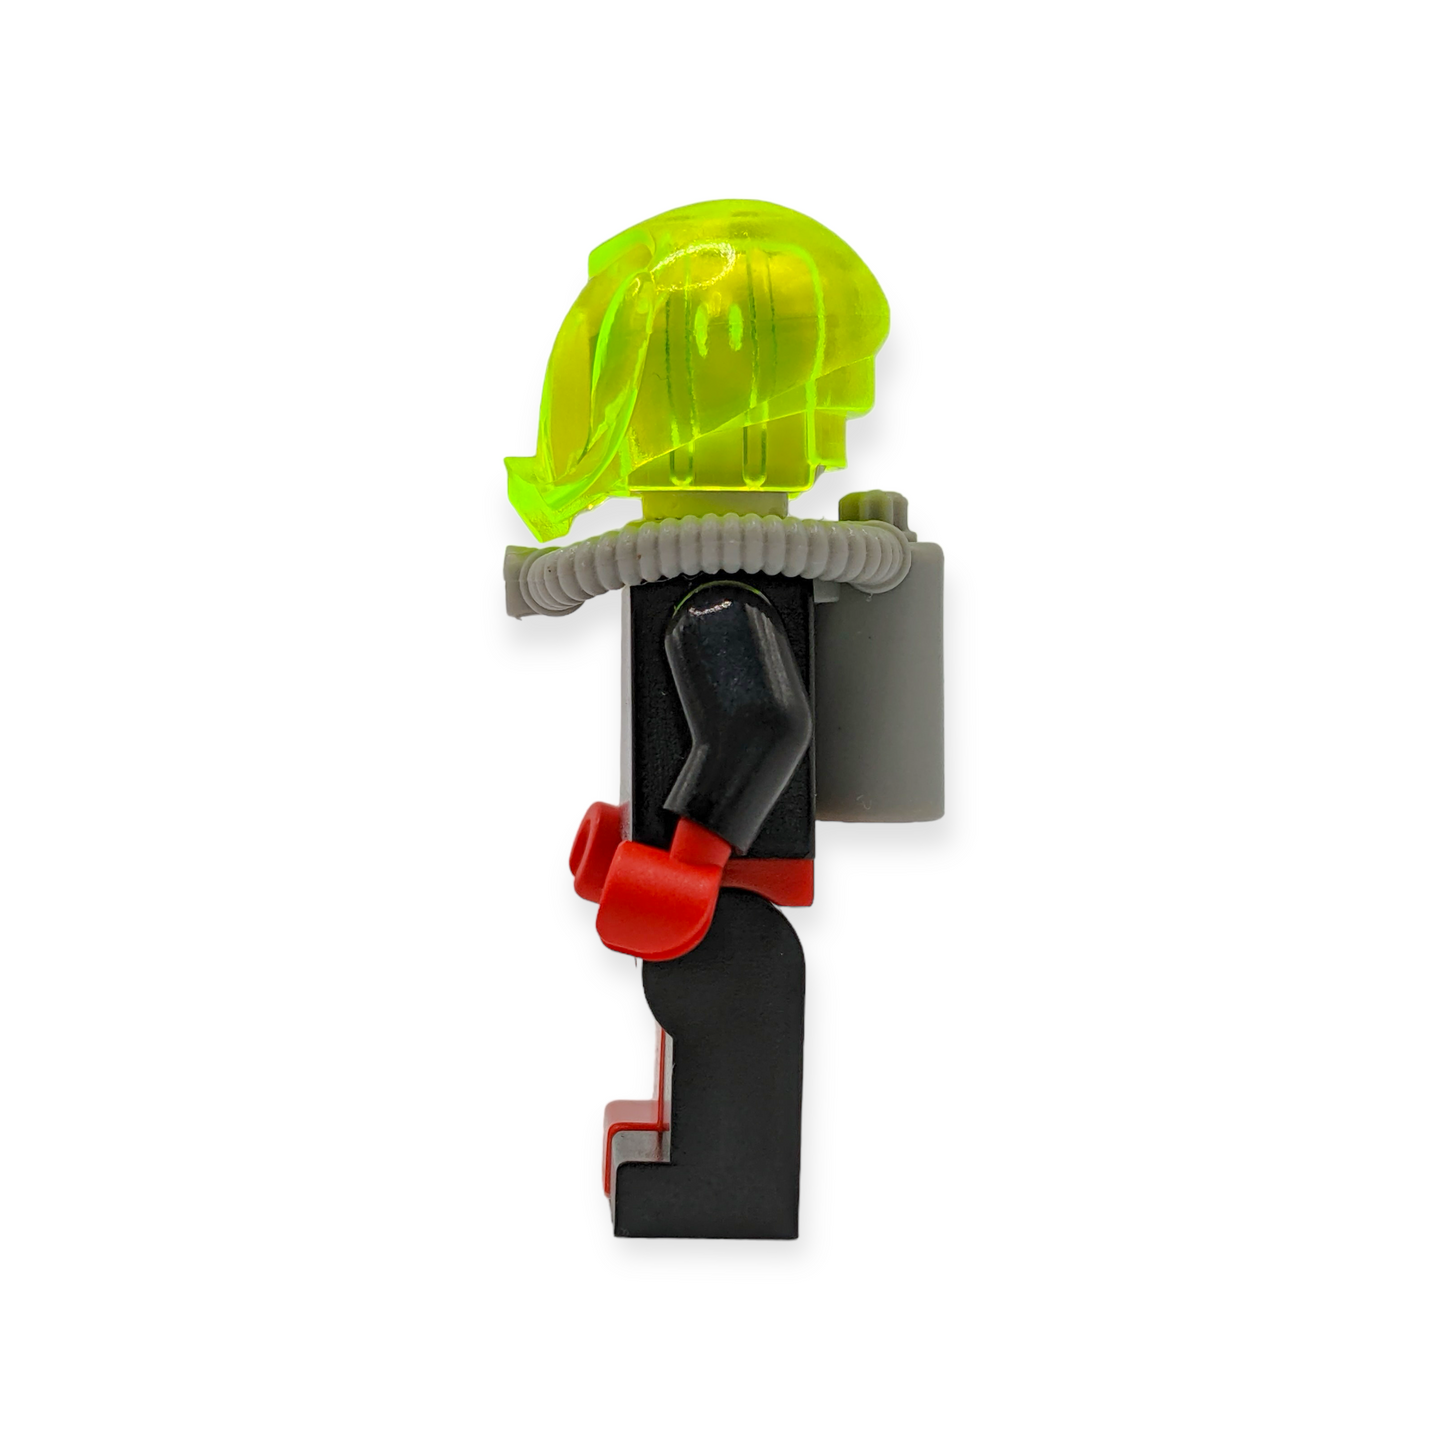 LEGO Minifigur Ogel Minion - Mission Deep Sea alp019